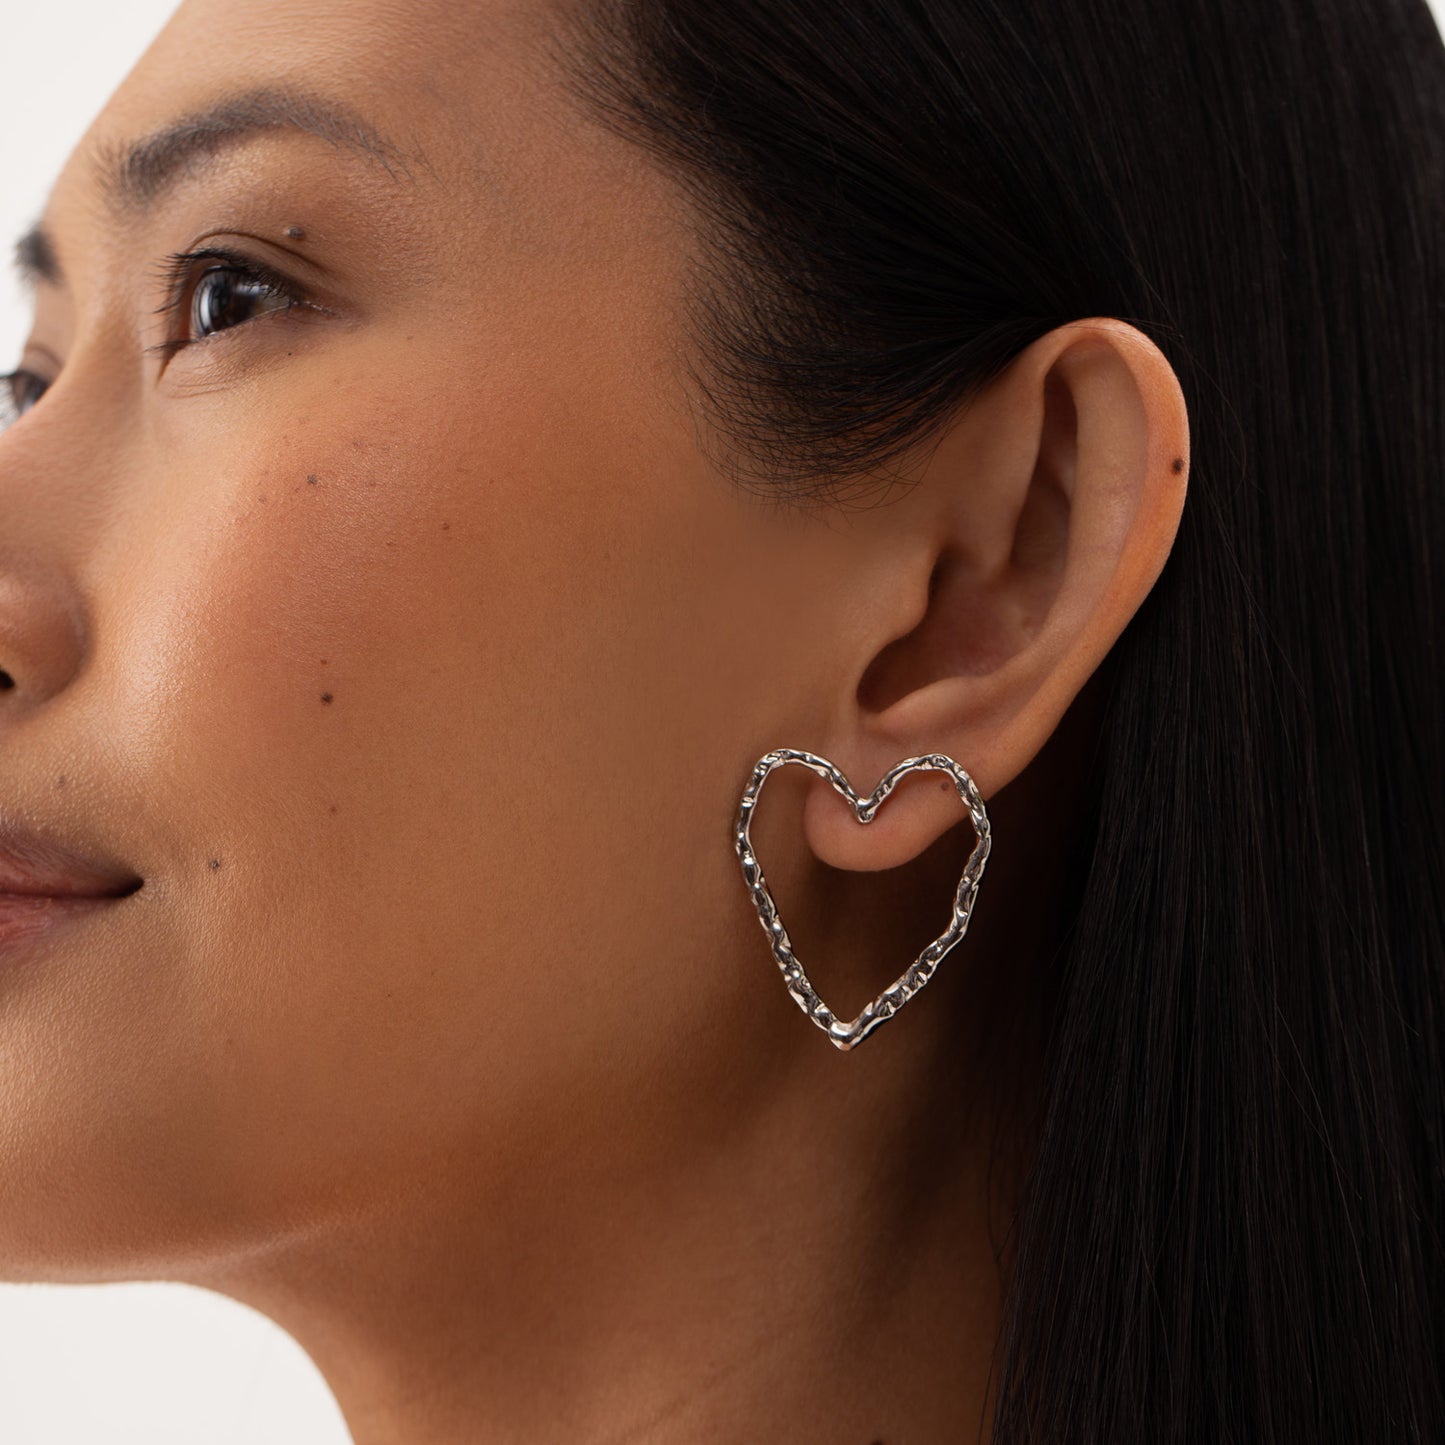 Eros silver stud earrings